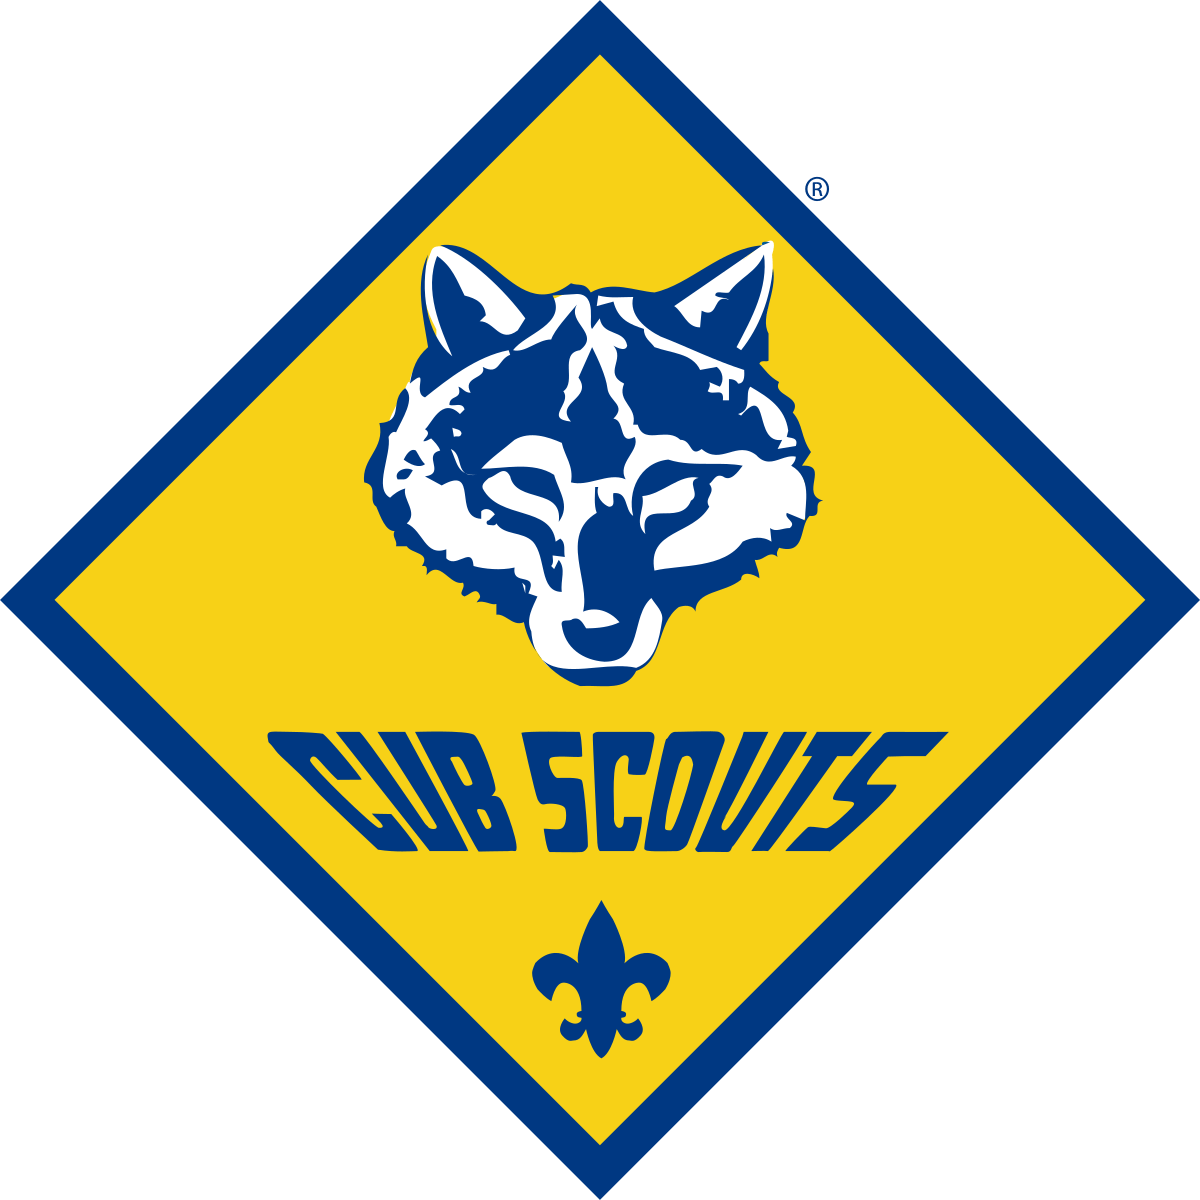 Webelos Logo - Cub Scouting (Boy Scouts of America)